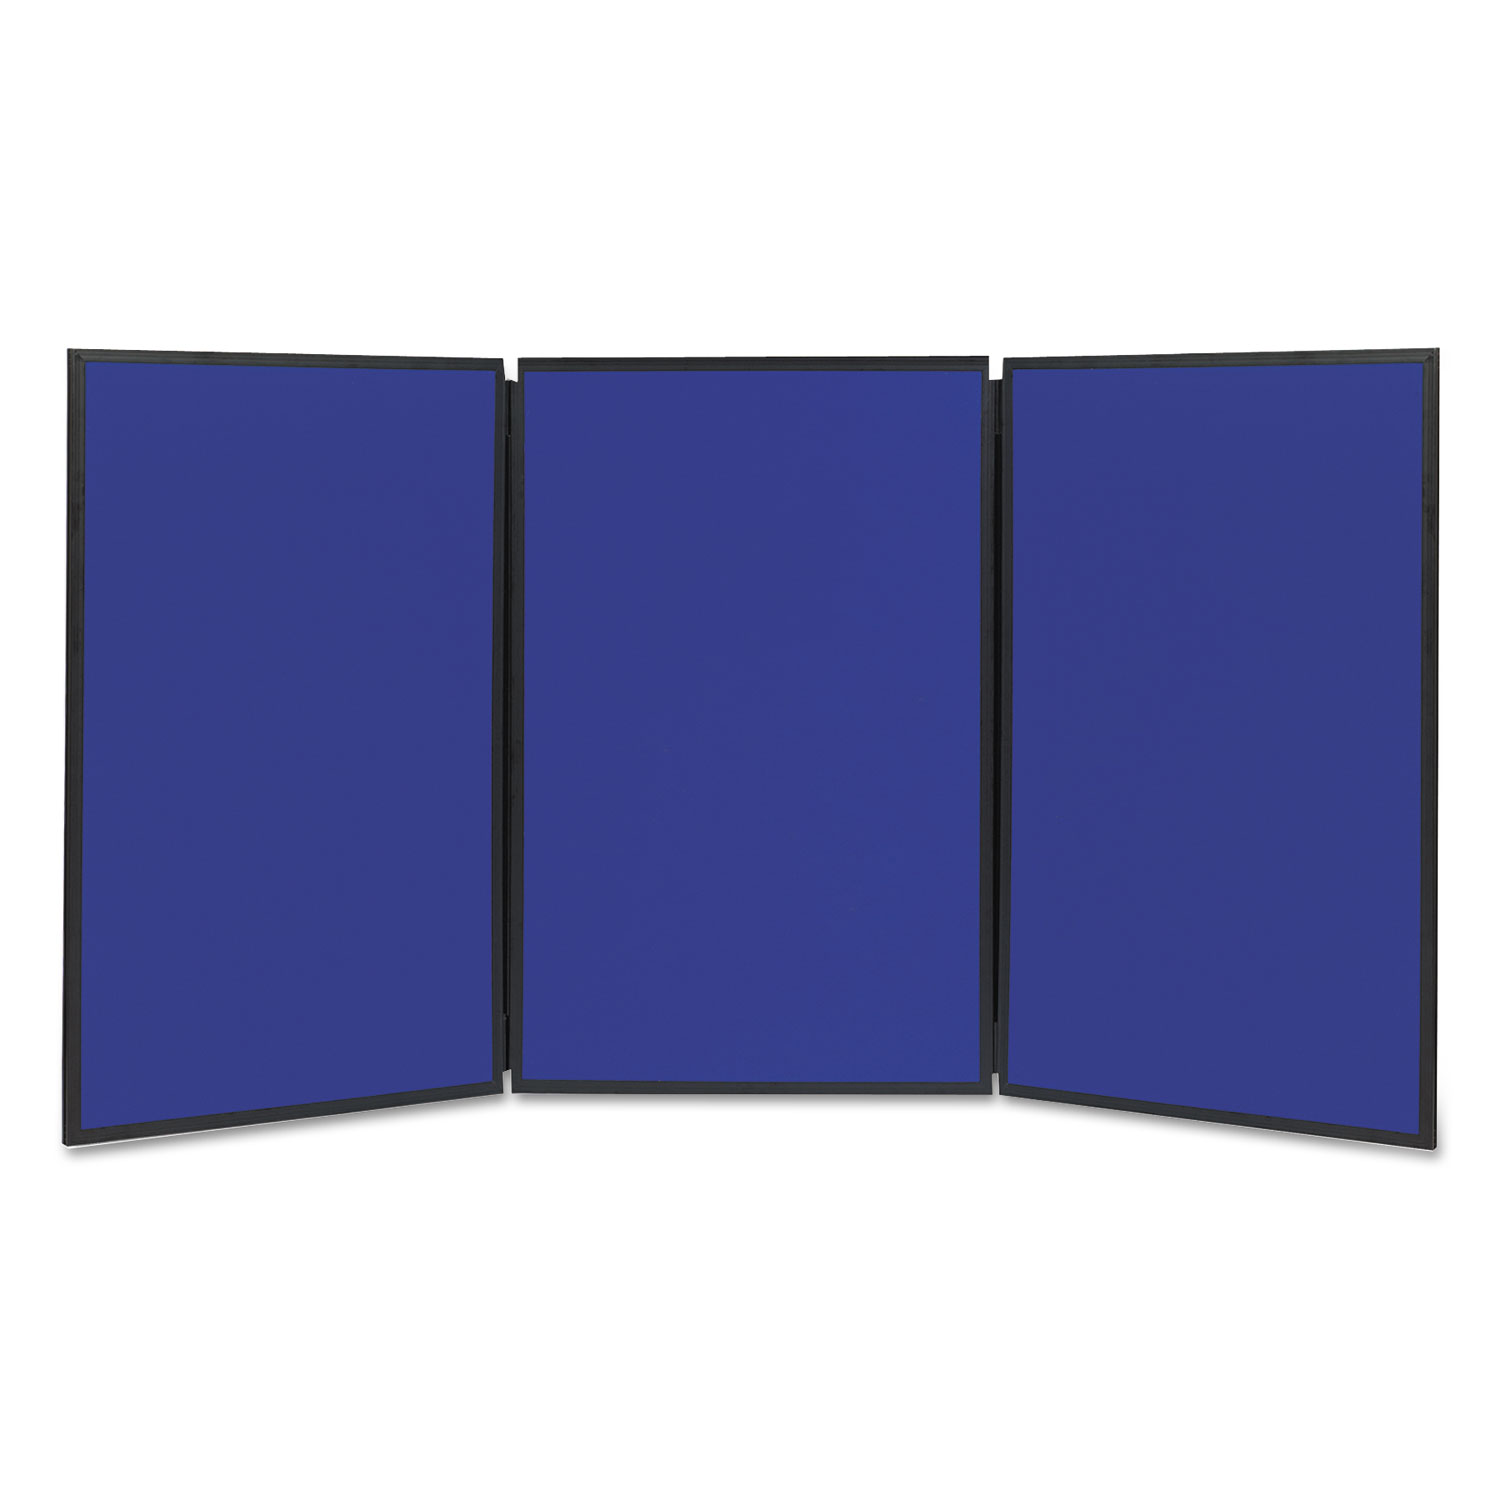  Quartet SB93513Q Show-It! Display System, 72 x 36, Blue/Gray Surface, Black Frame (QRTSB93513Q) 